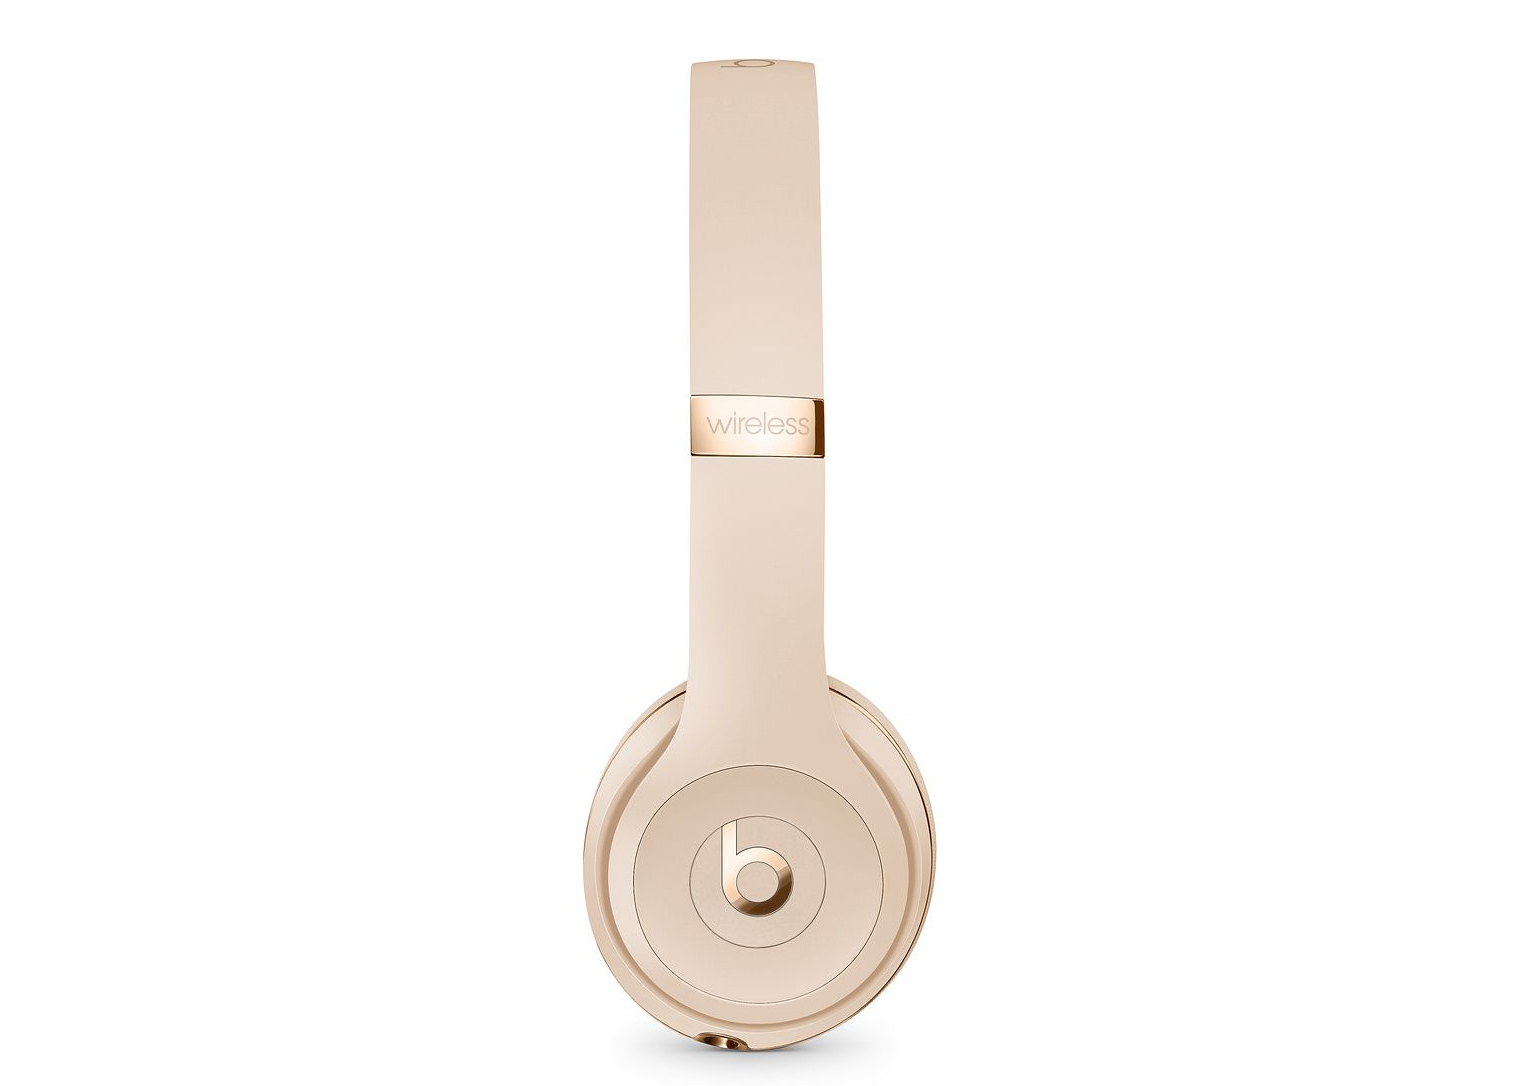 Beats by Dr. Dre Solo3 Wireless On-Ear Headphones MX462LL/A Satin